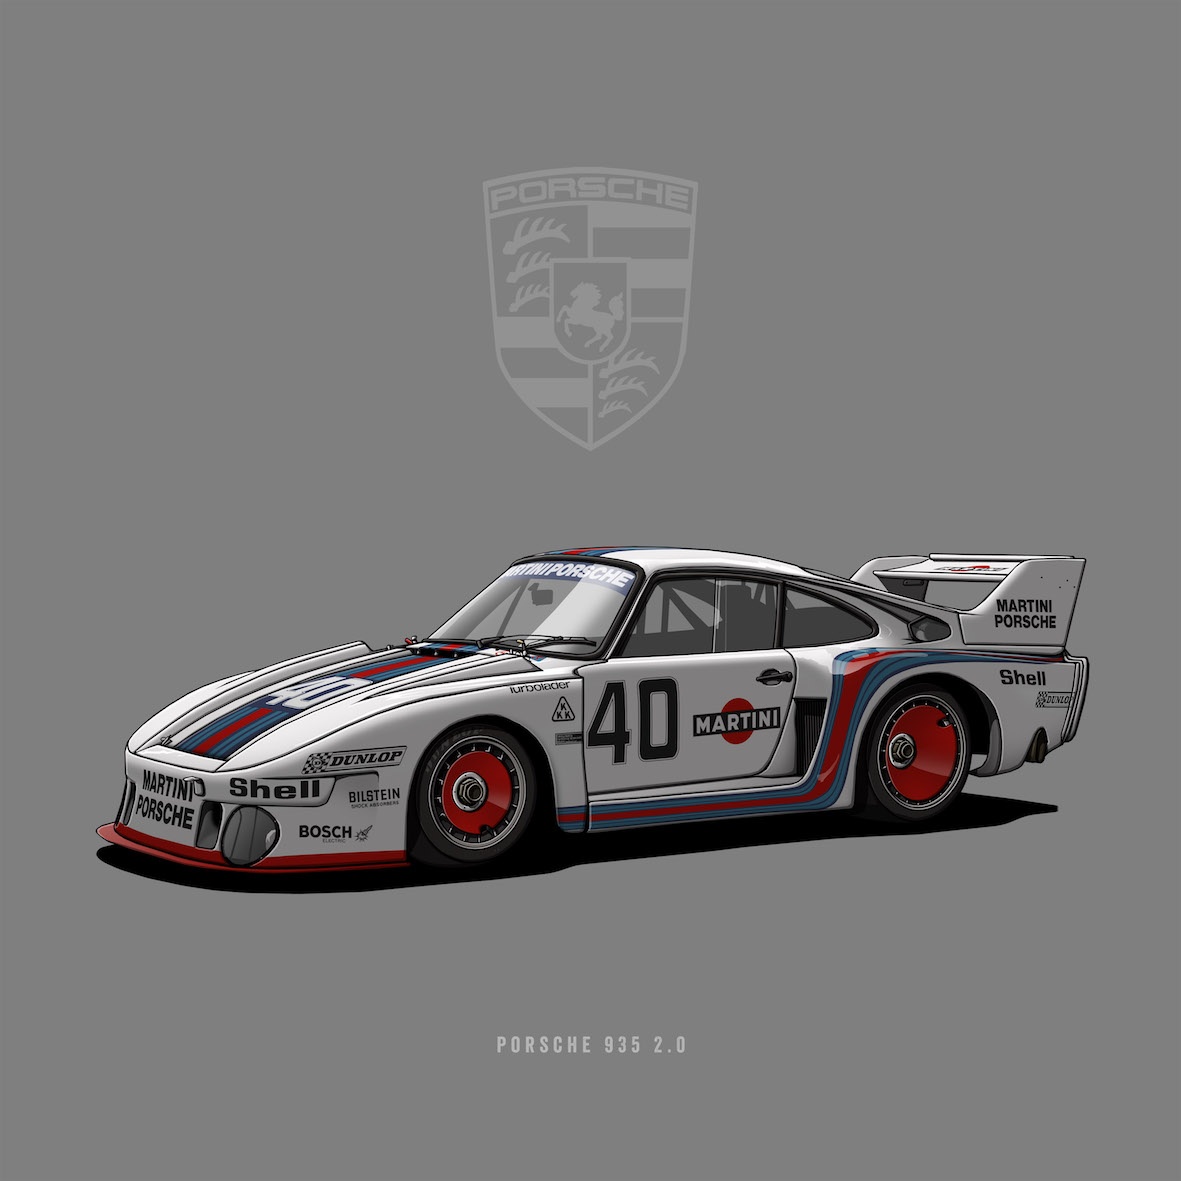 Porsche 935 2.0 by Helge Jepsen